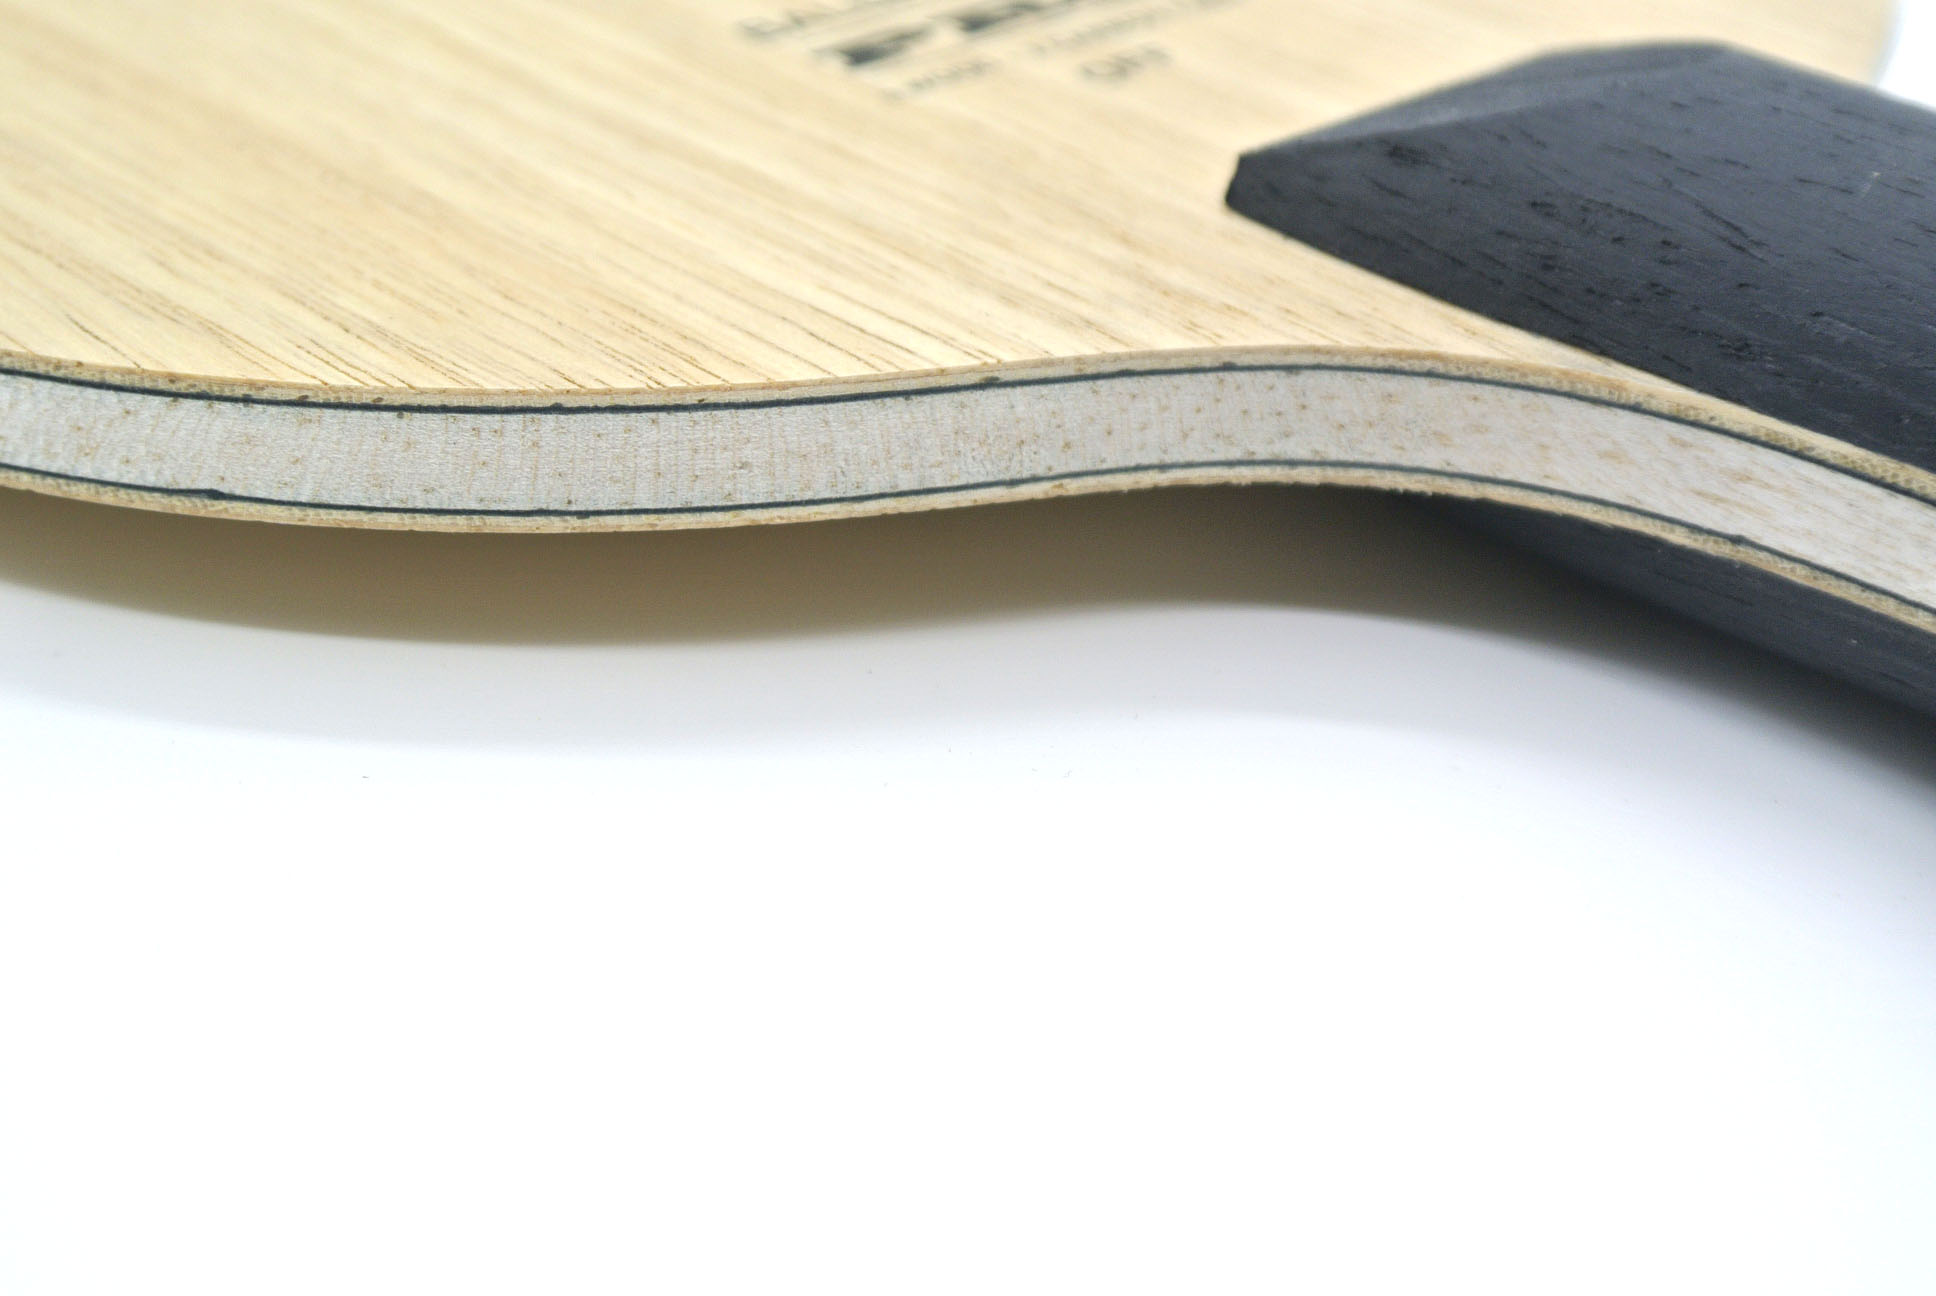 XVT Balsa Limba Pro carbon table tennis blade